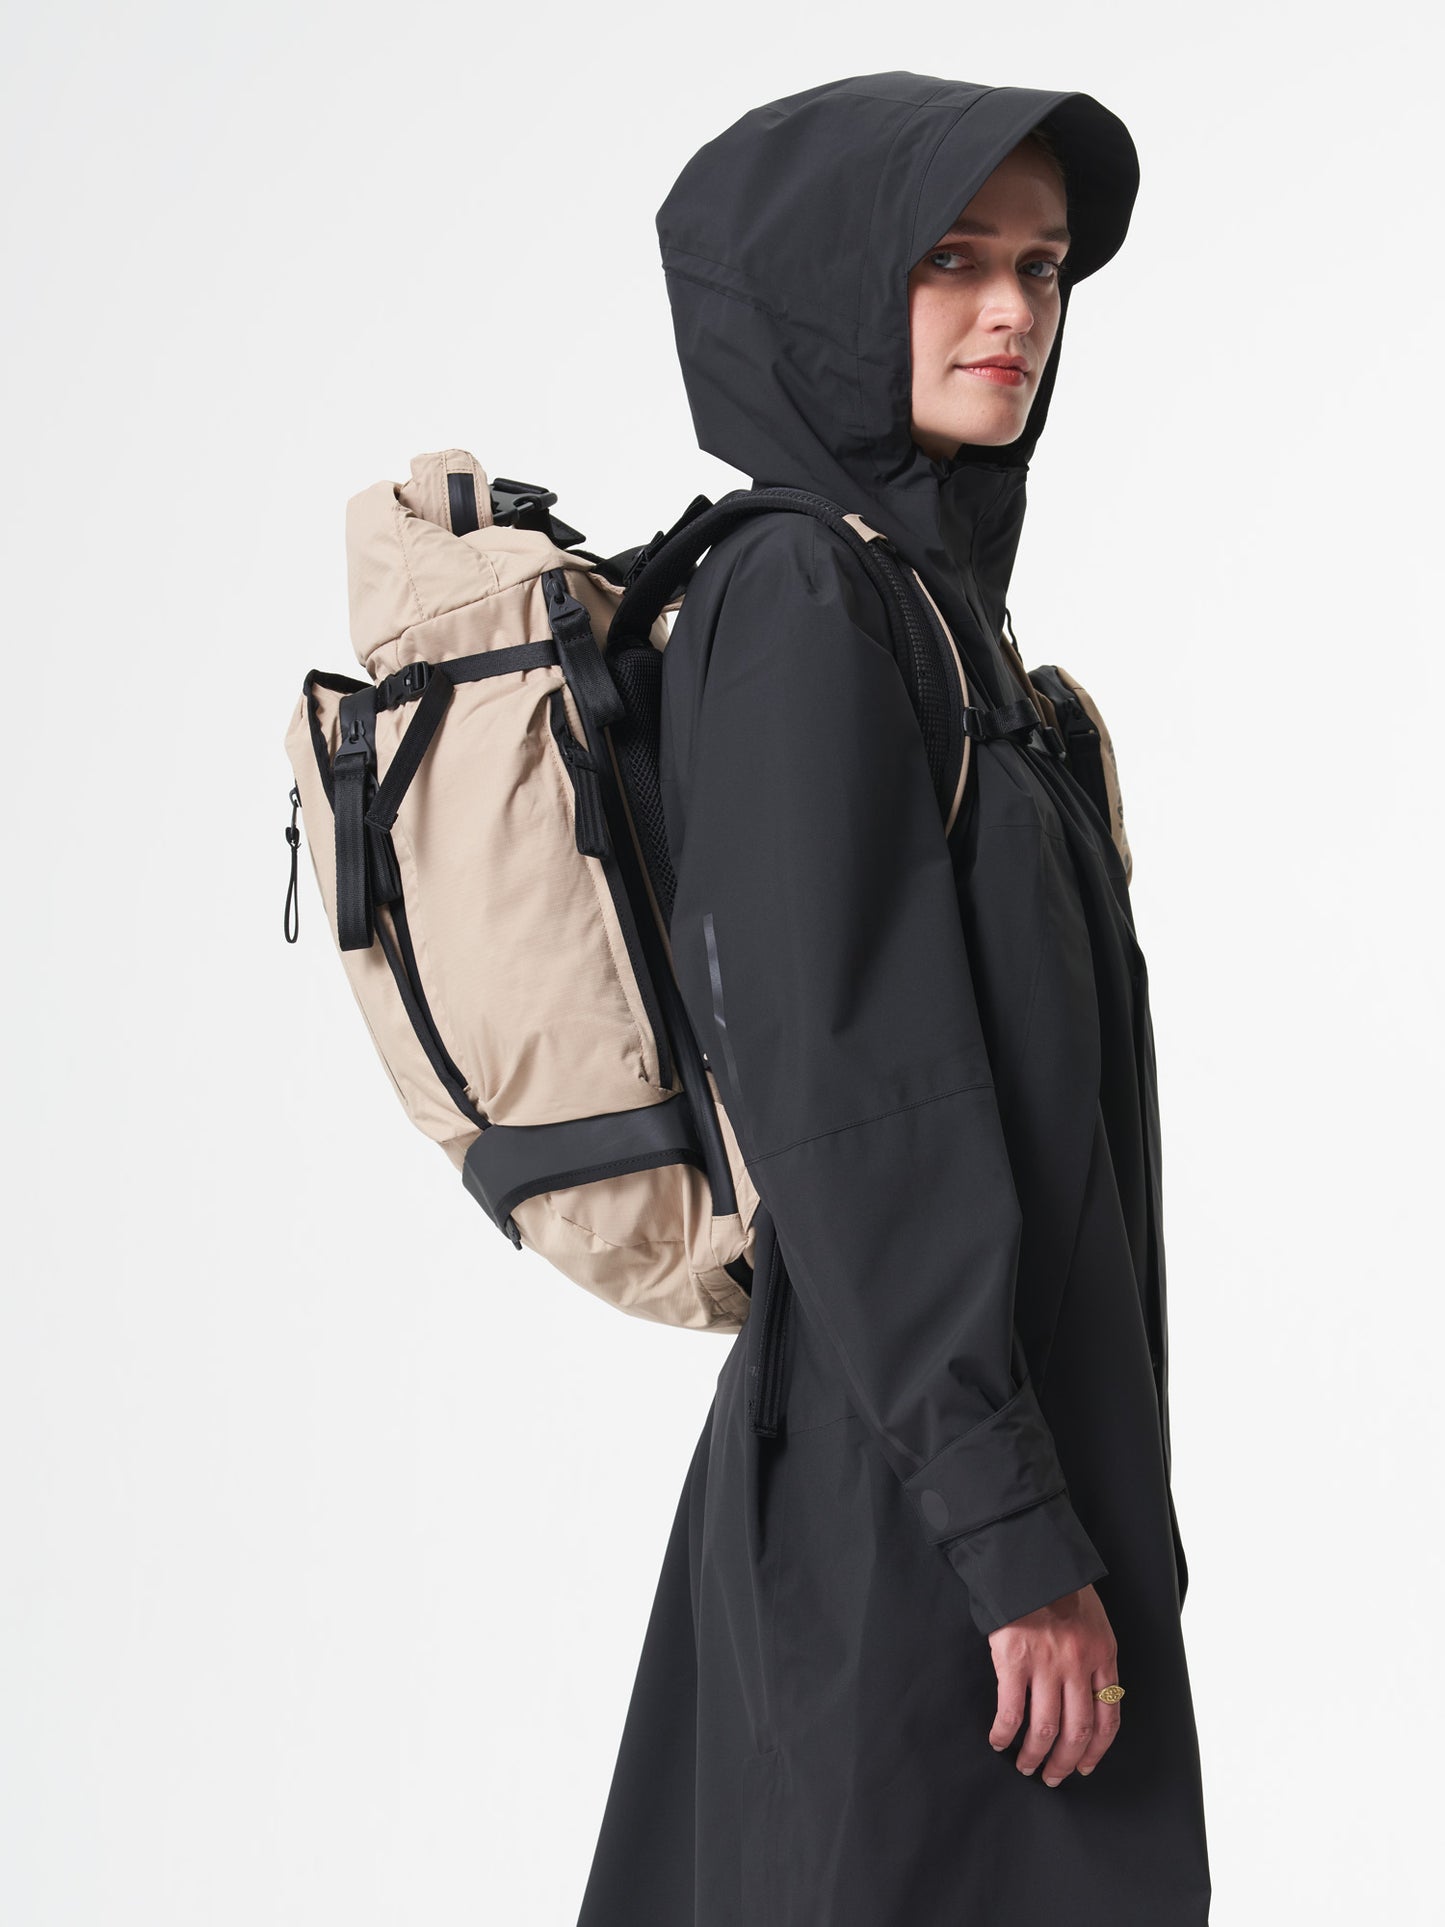 pinqponq-backpack-Komut-Medium-Pure-Khaki-model-side